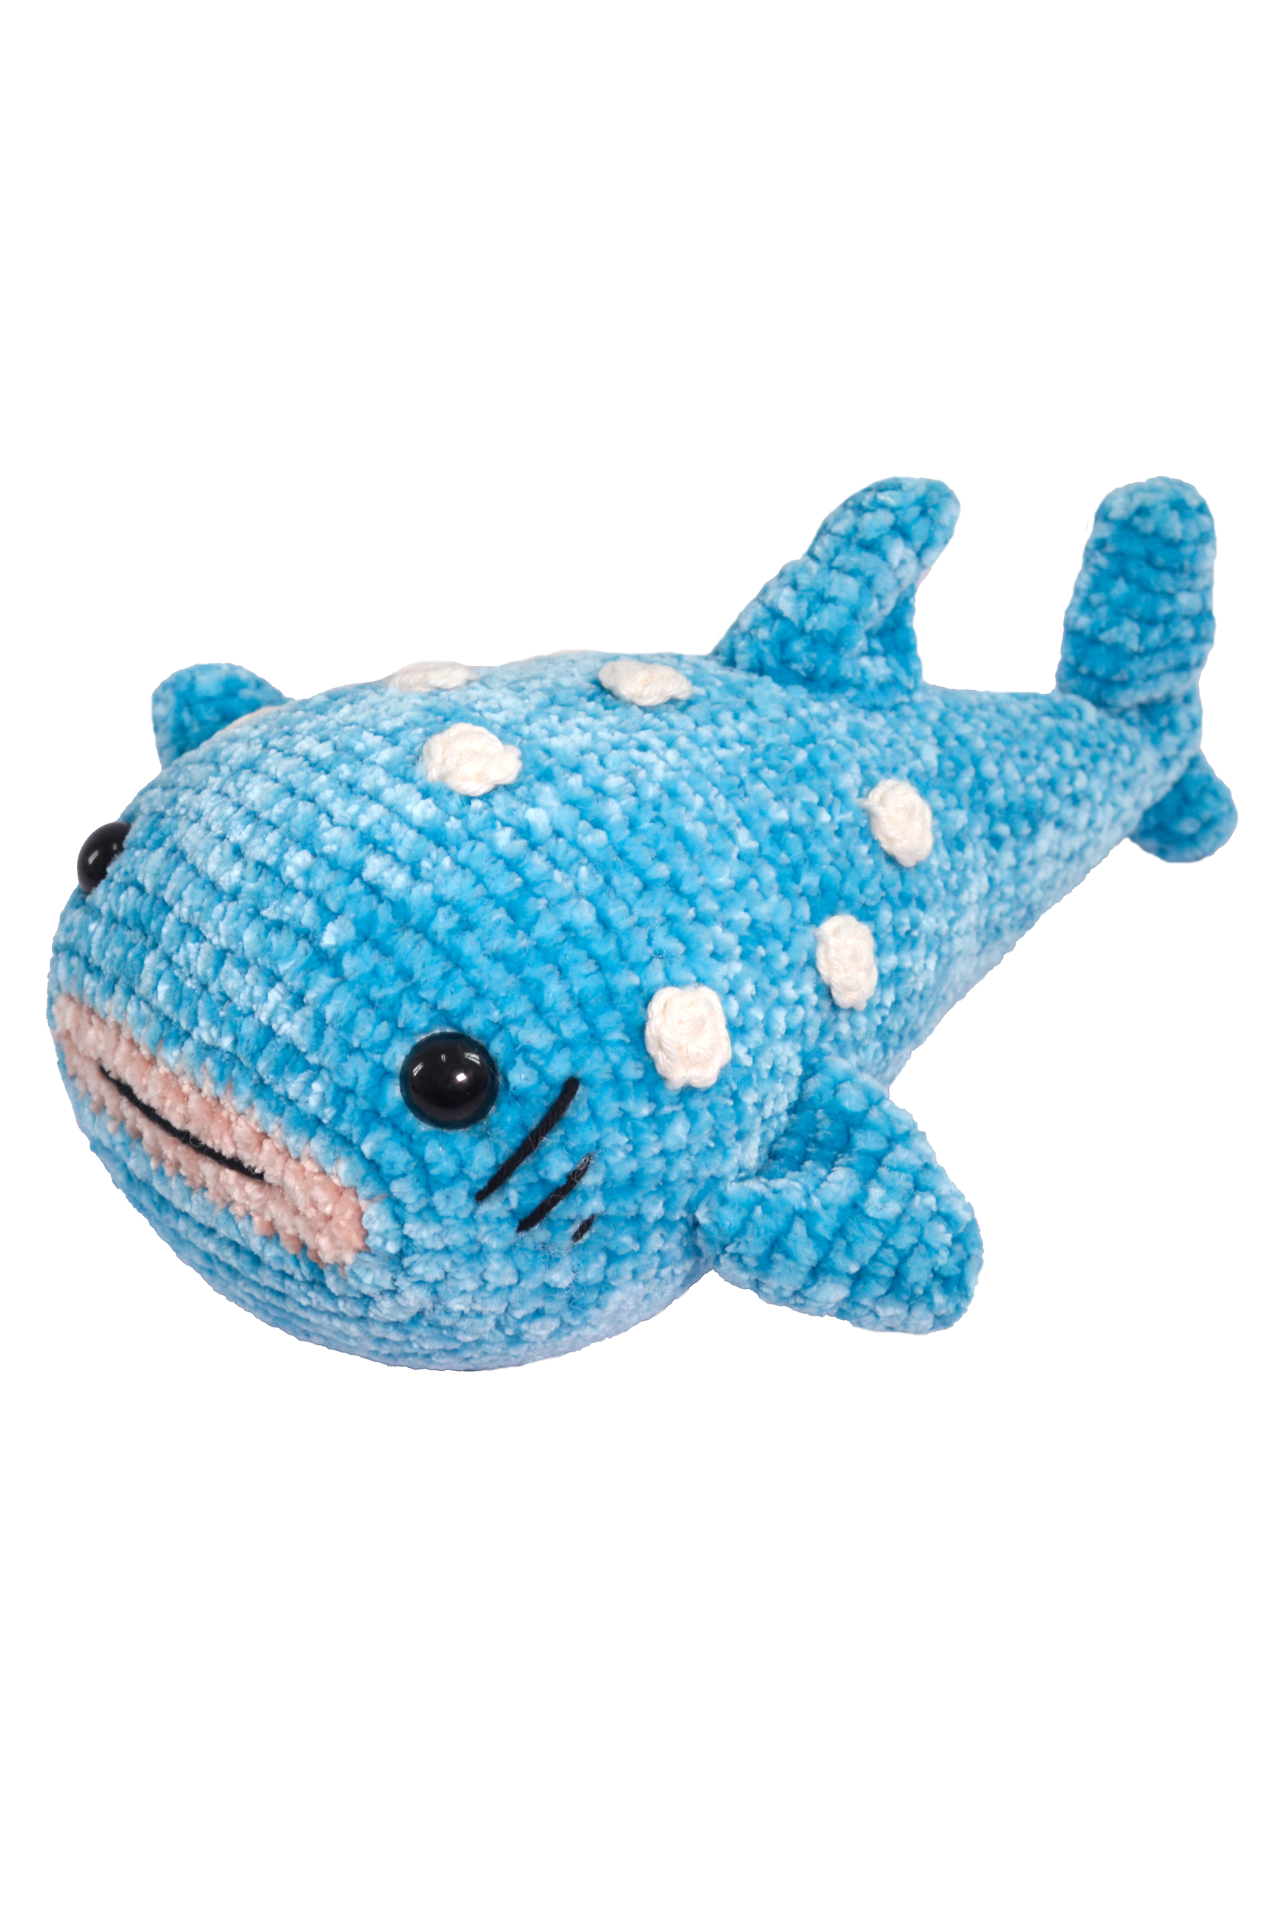 Whale Shark Crochet Pattern